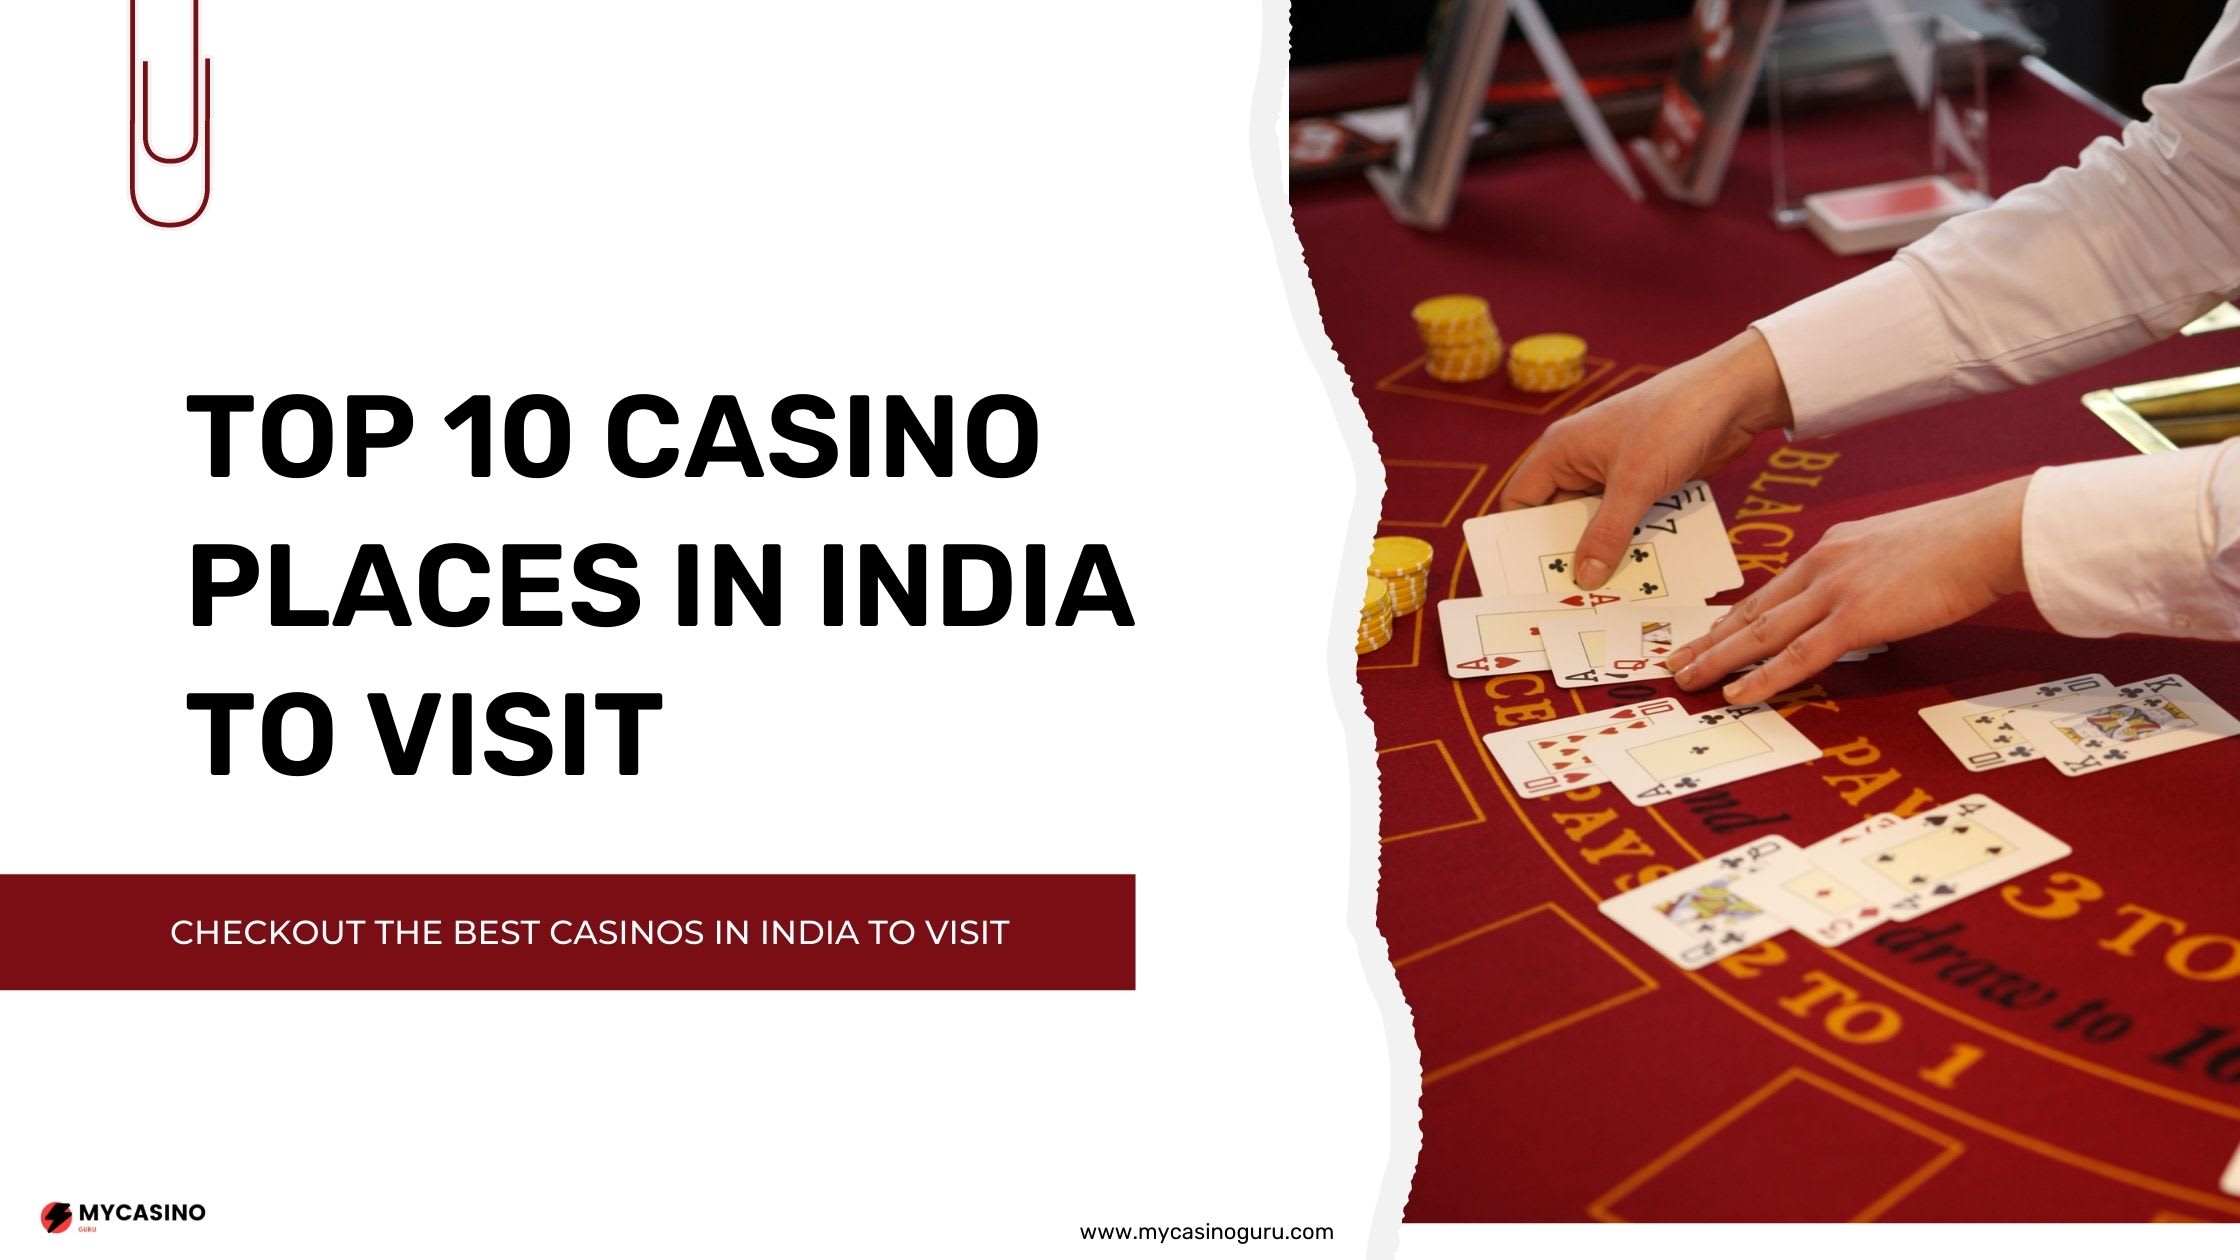 Casino live India goal